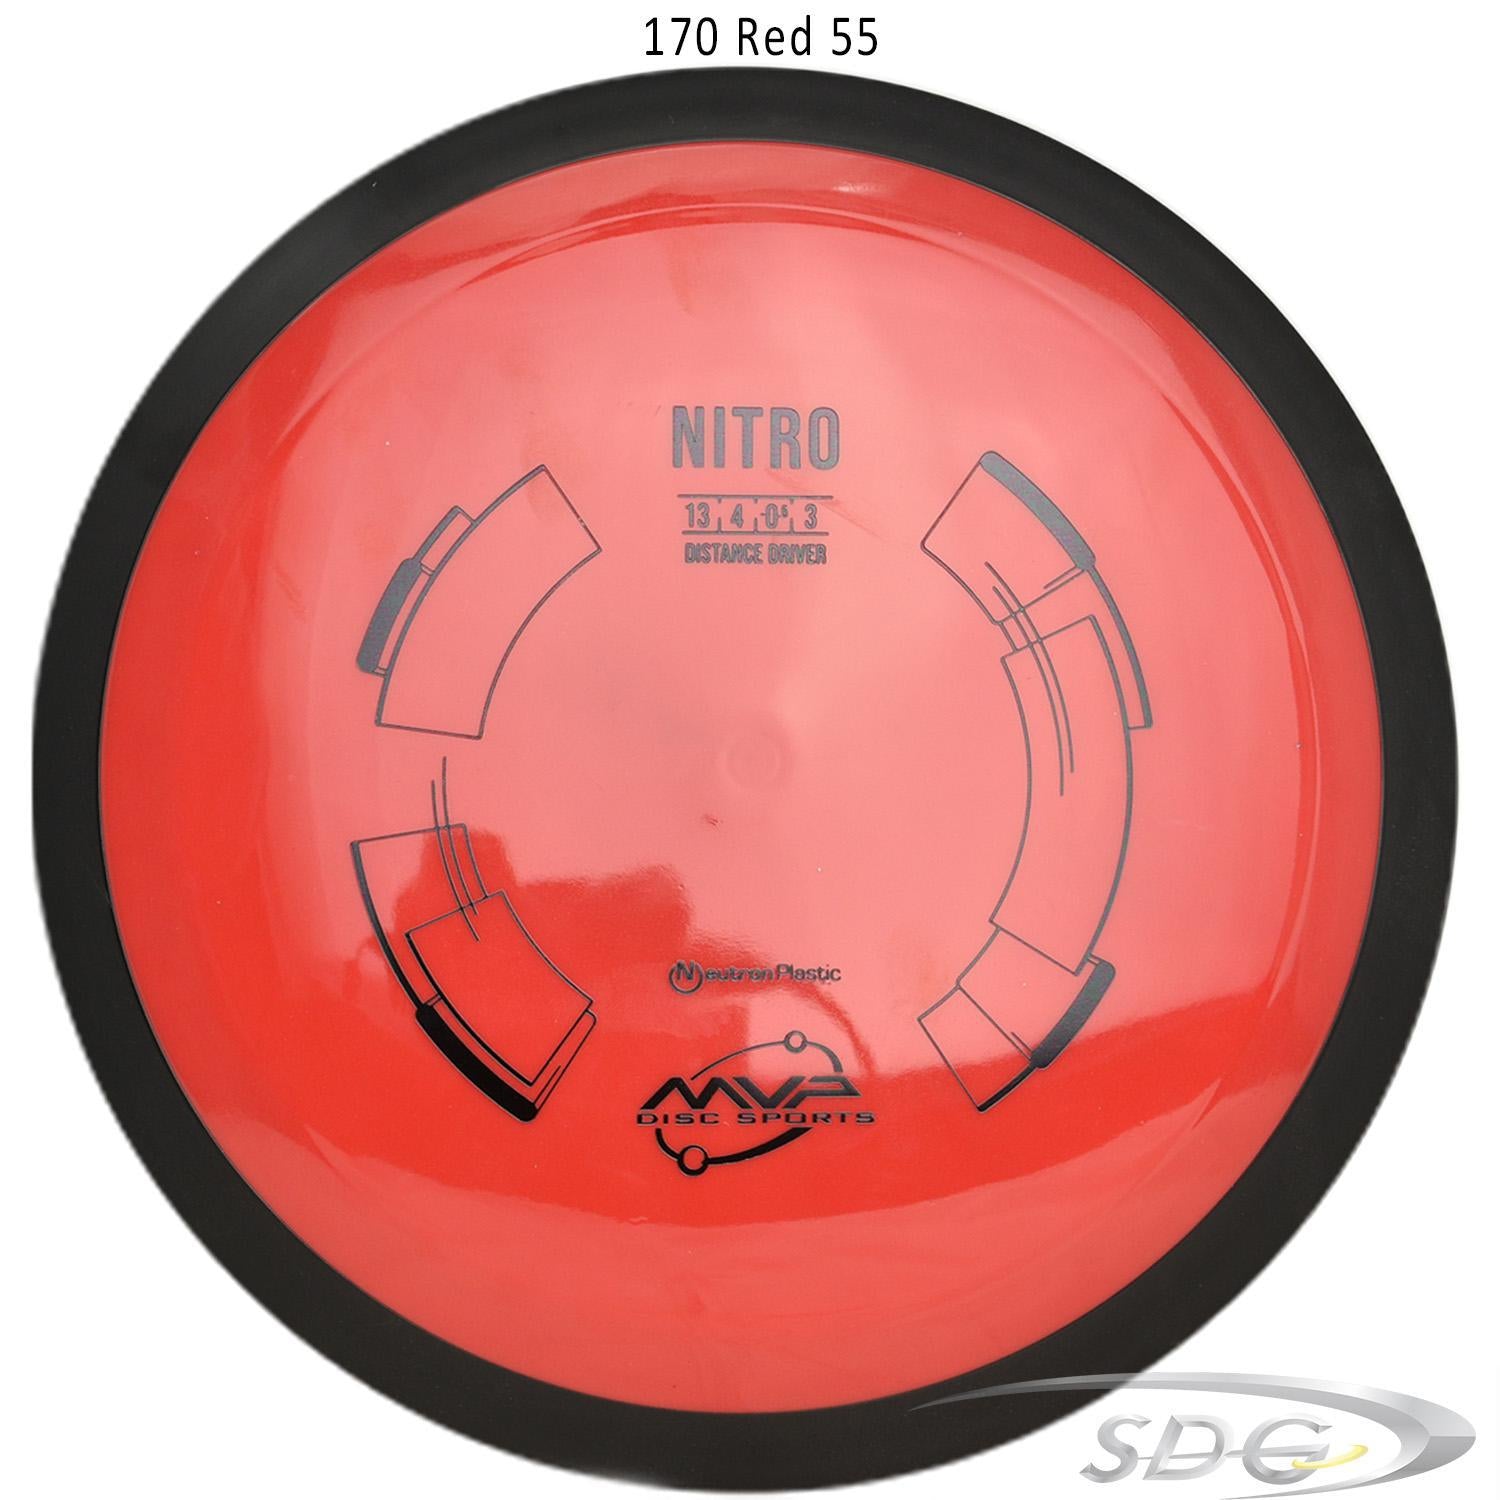 mvp-neutron-nitro-disc-golf-distance-driver 170 Red 55 